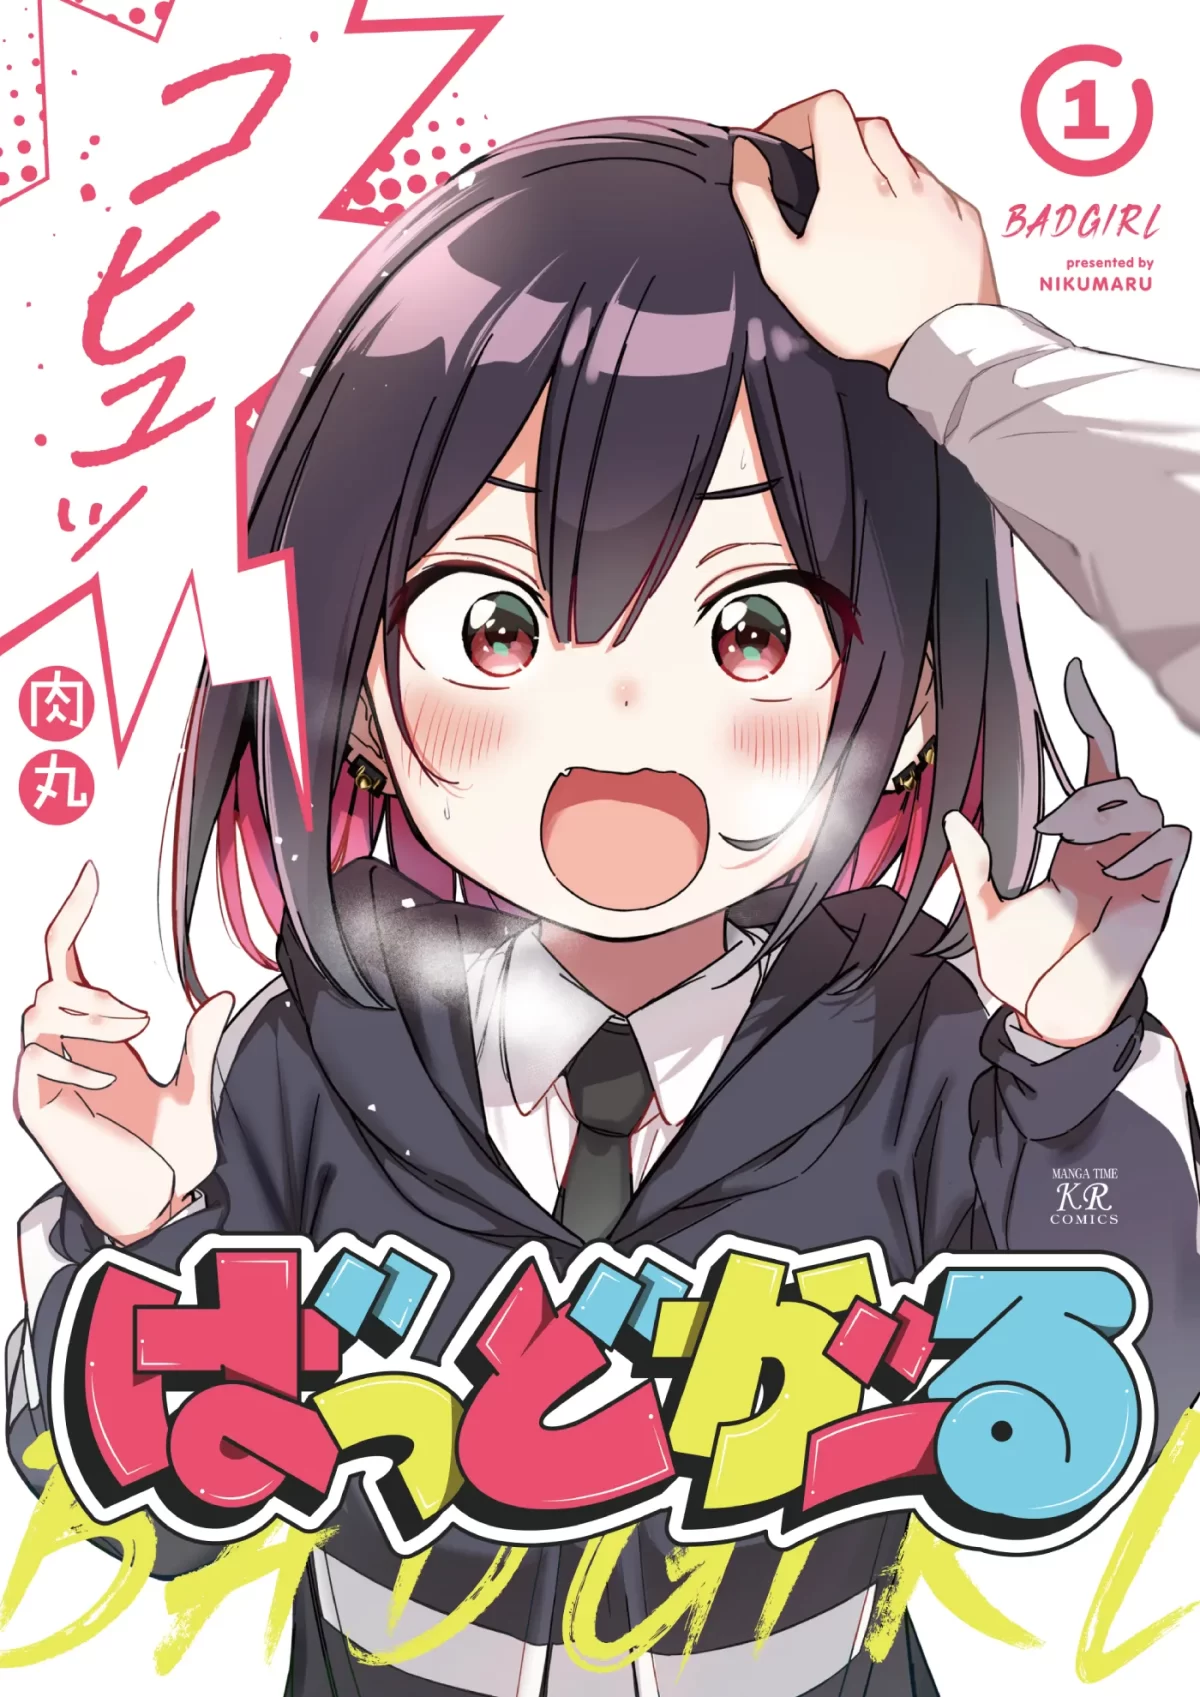 Bad Girl Manga Vol 1